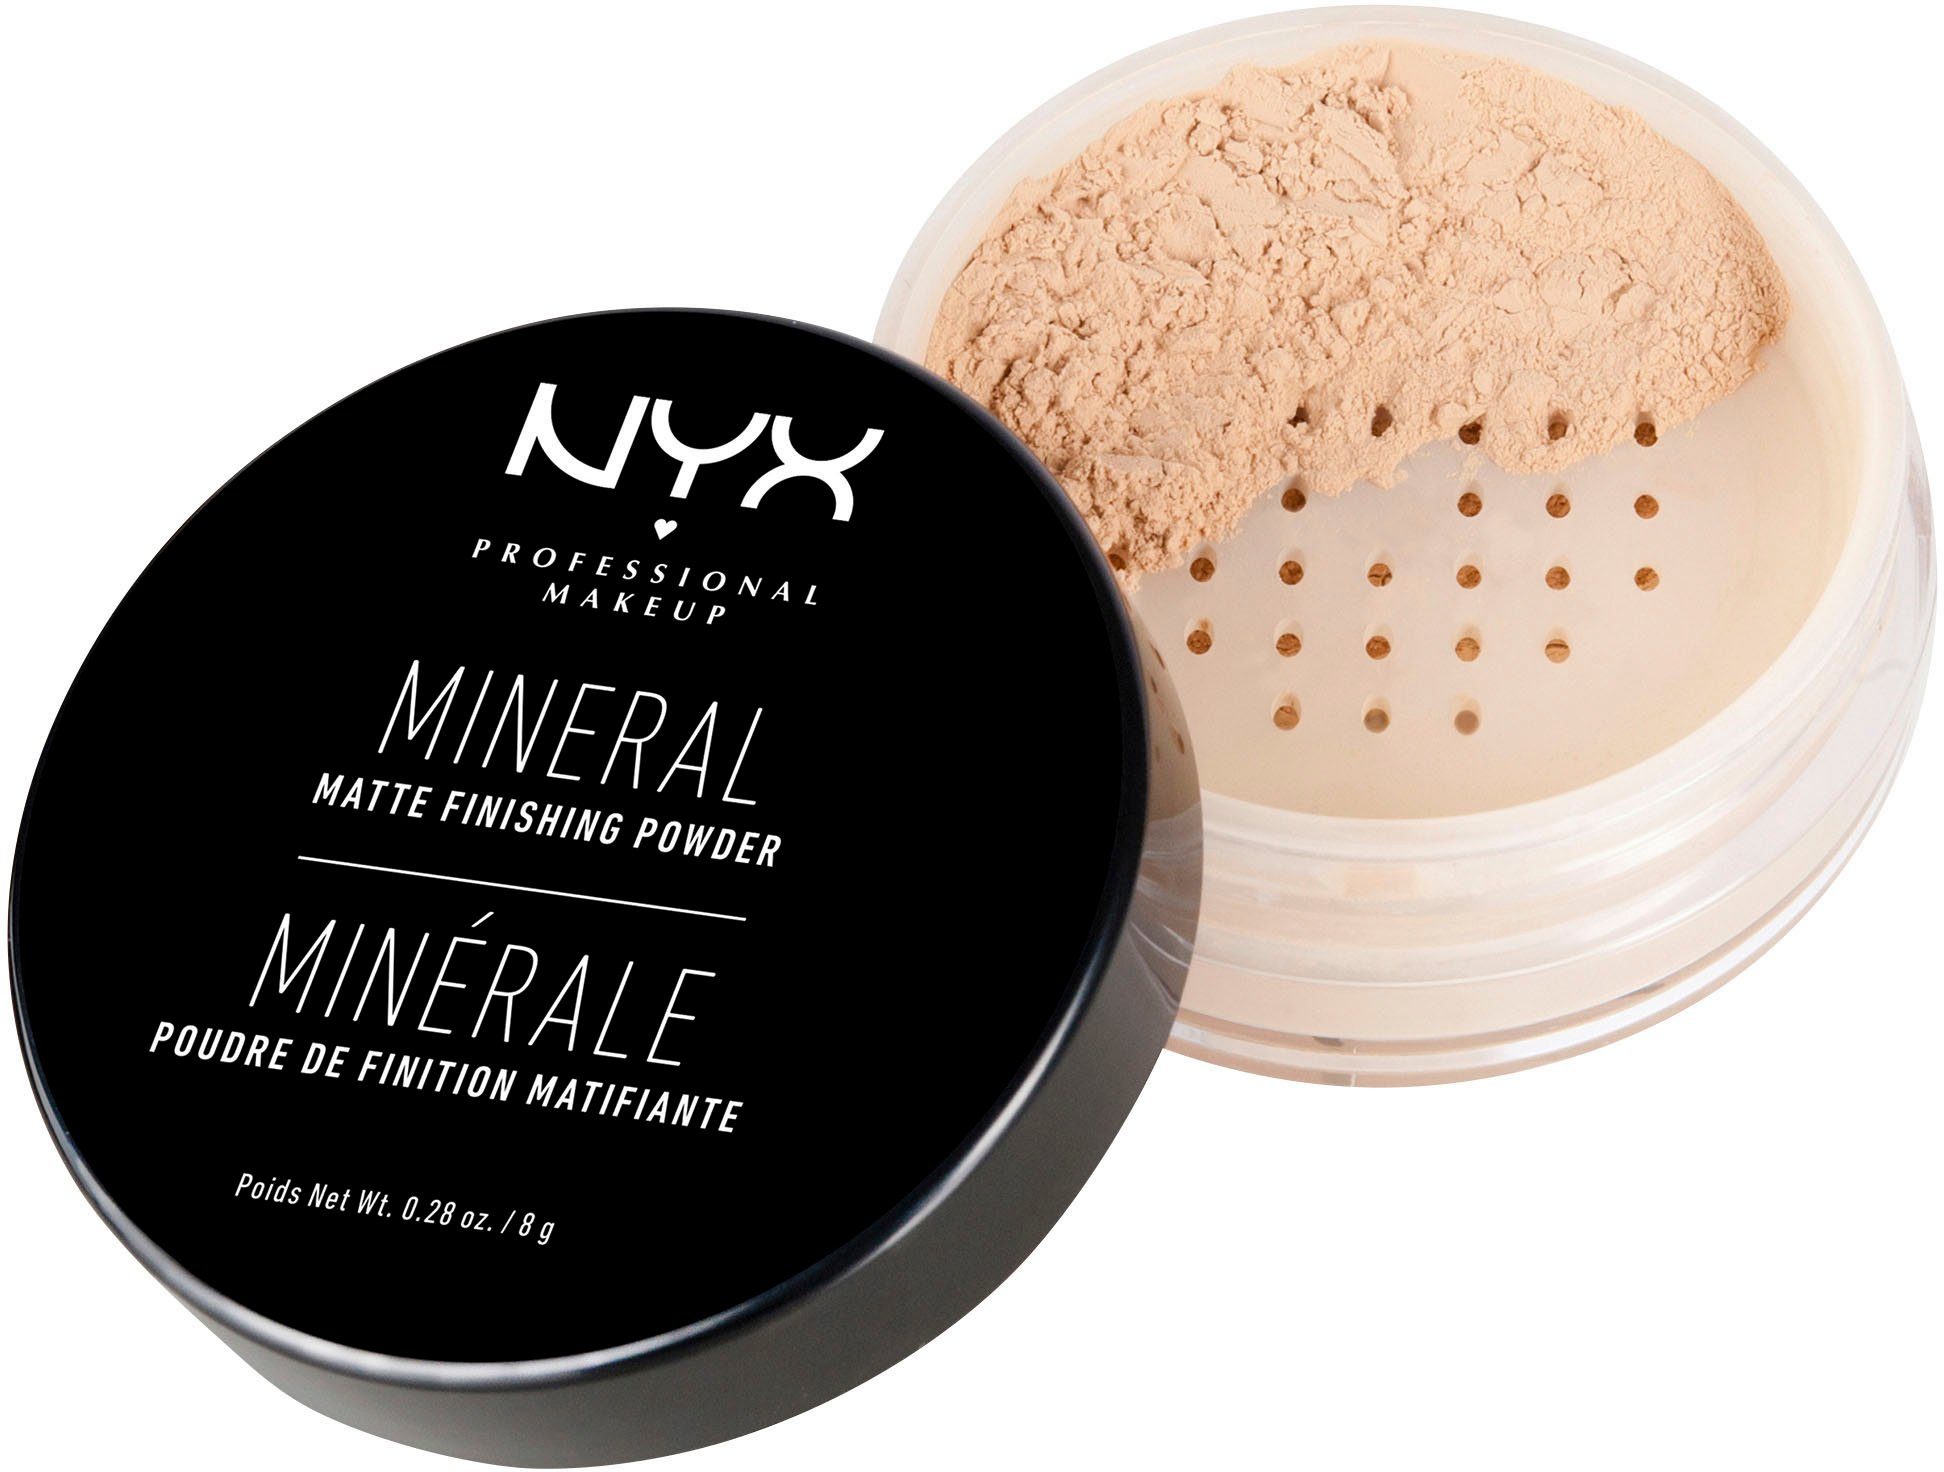 NYX Пудра NYX Professional Makeup Mineral Finishing Powder